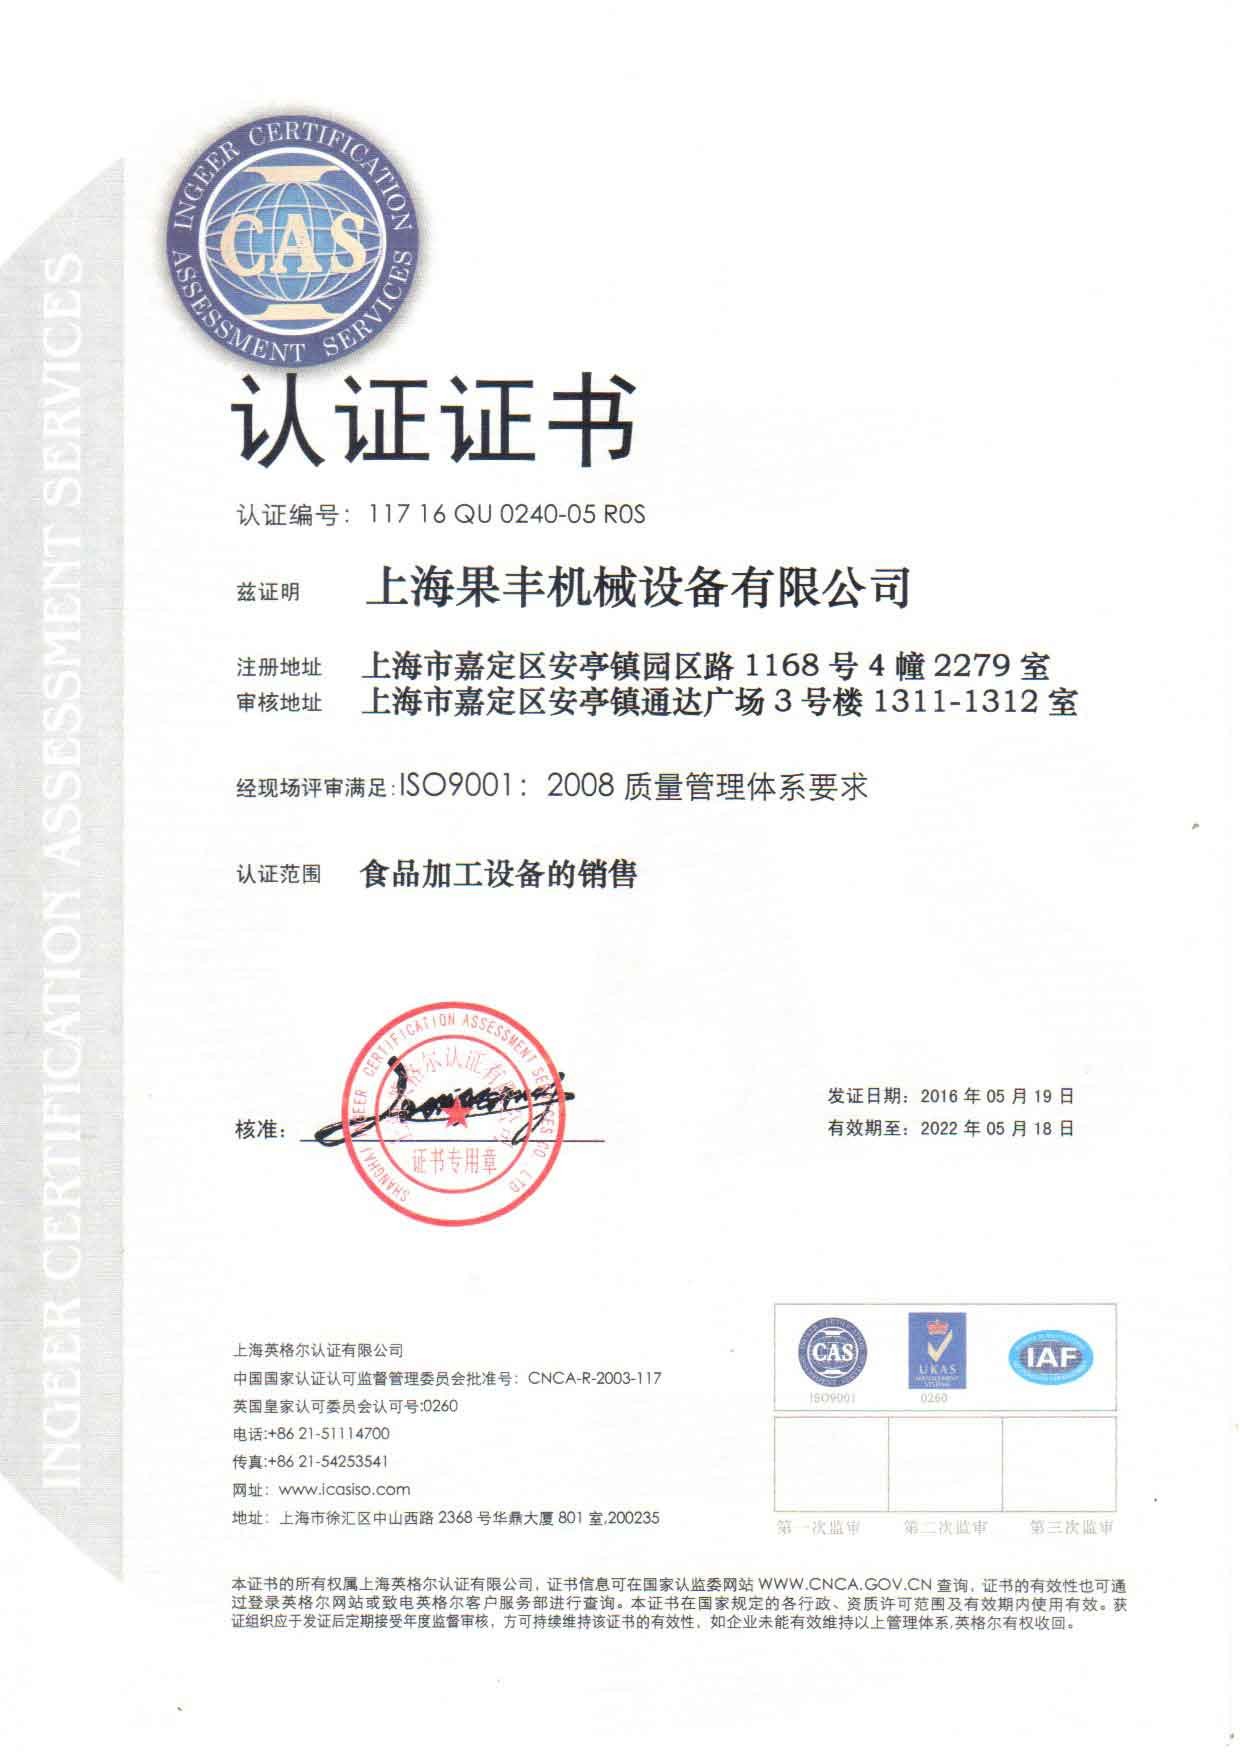 Shanghai Gofun Machinery Co., Ltd. Certifications